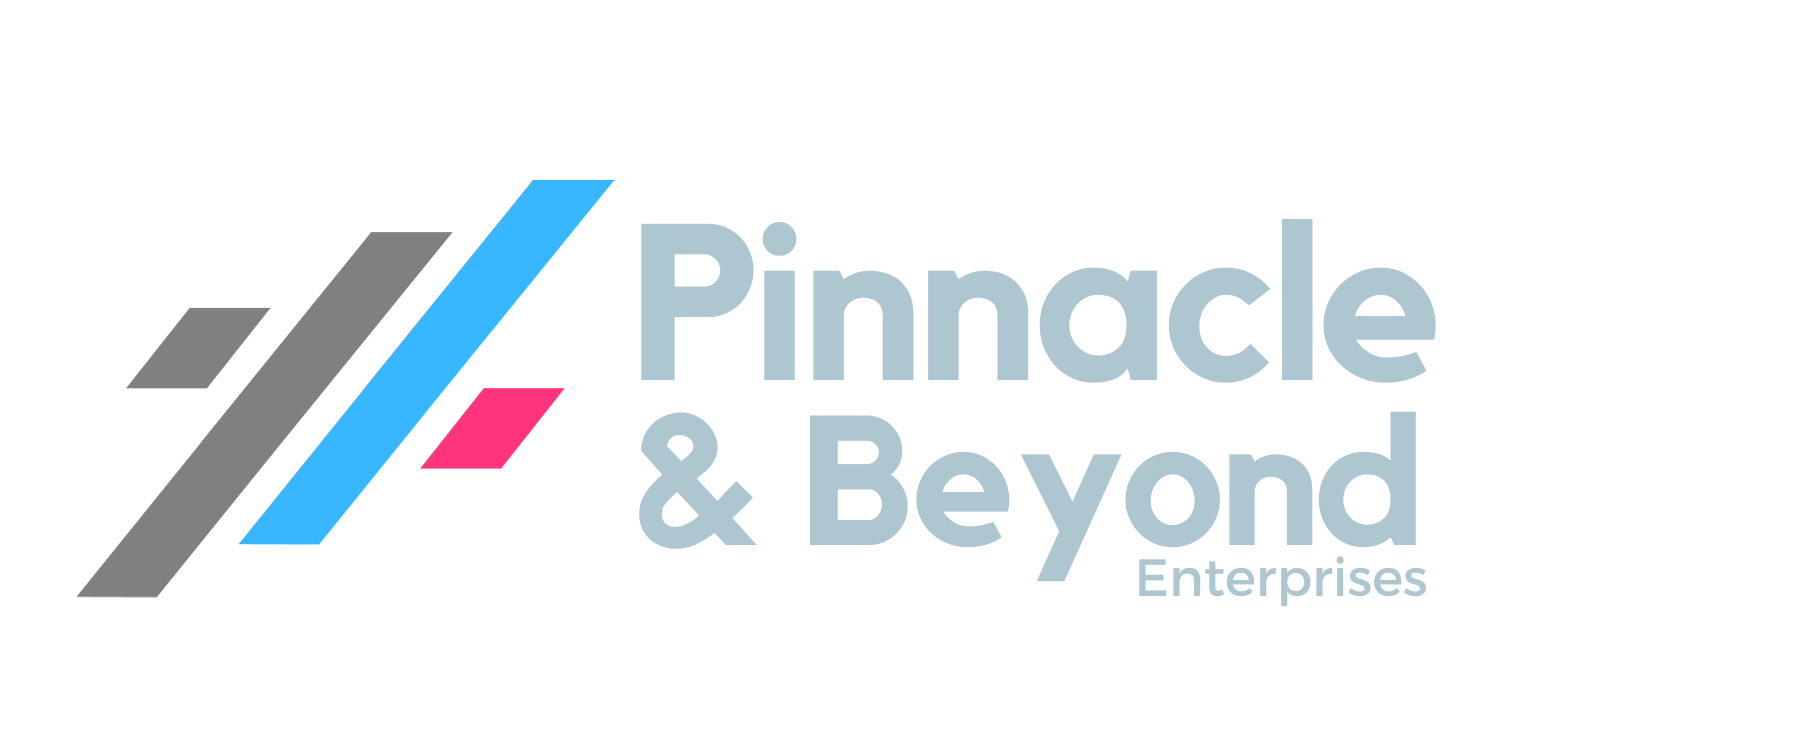 Pinnacle & Beyond Enterprises